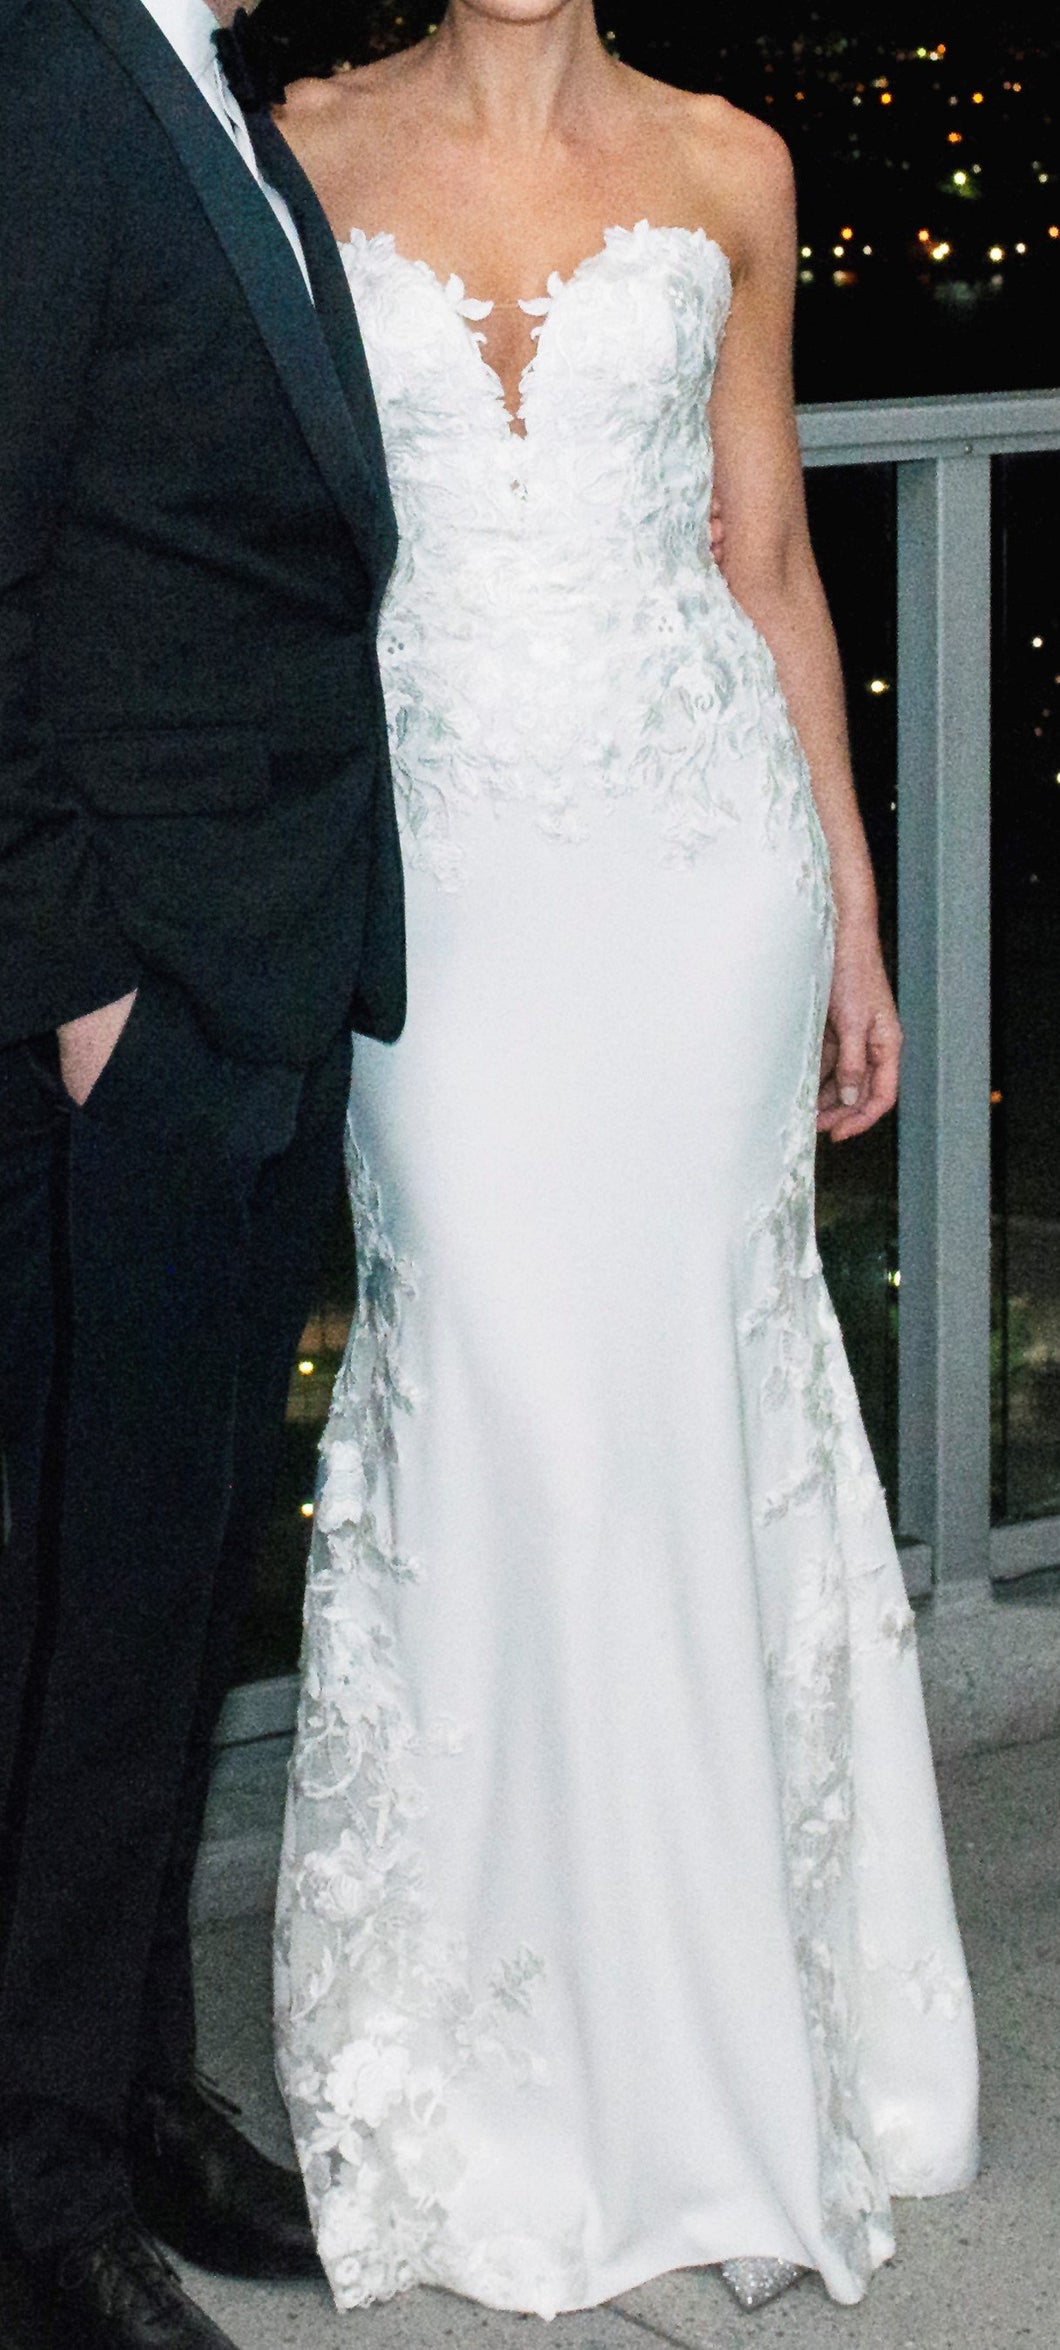 Pronovias 'Mermaid Crepe' size 4 used wedding dress front view on bride